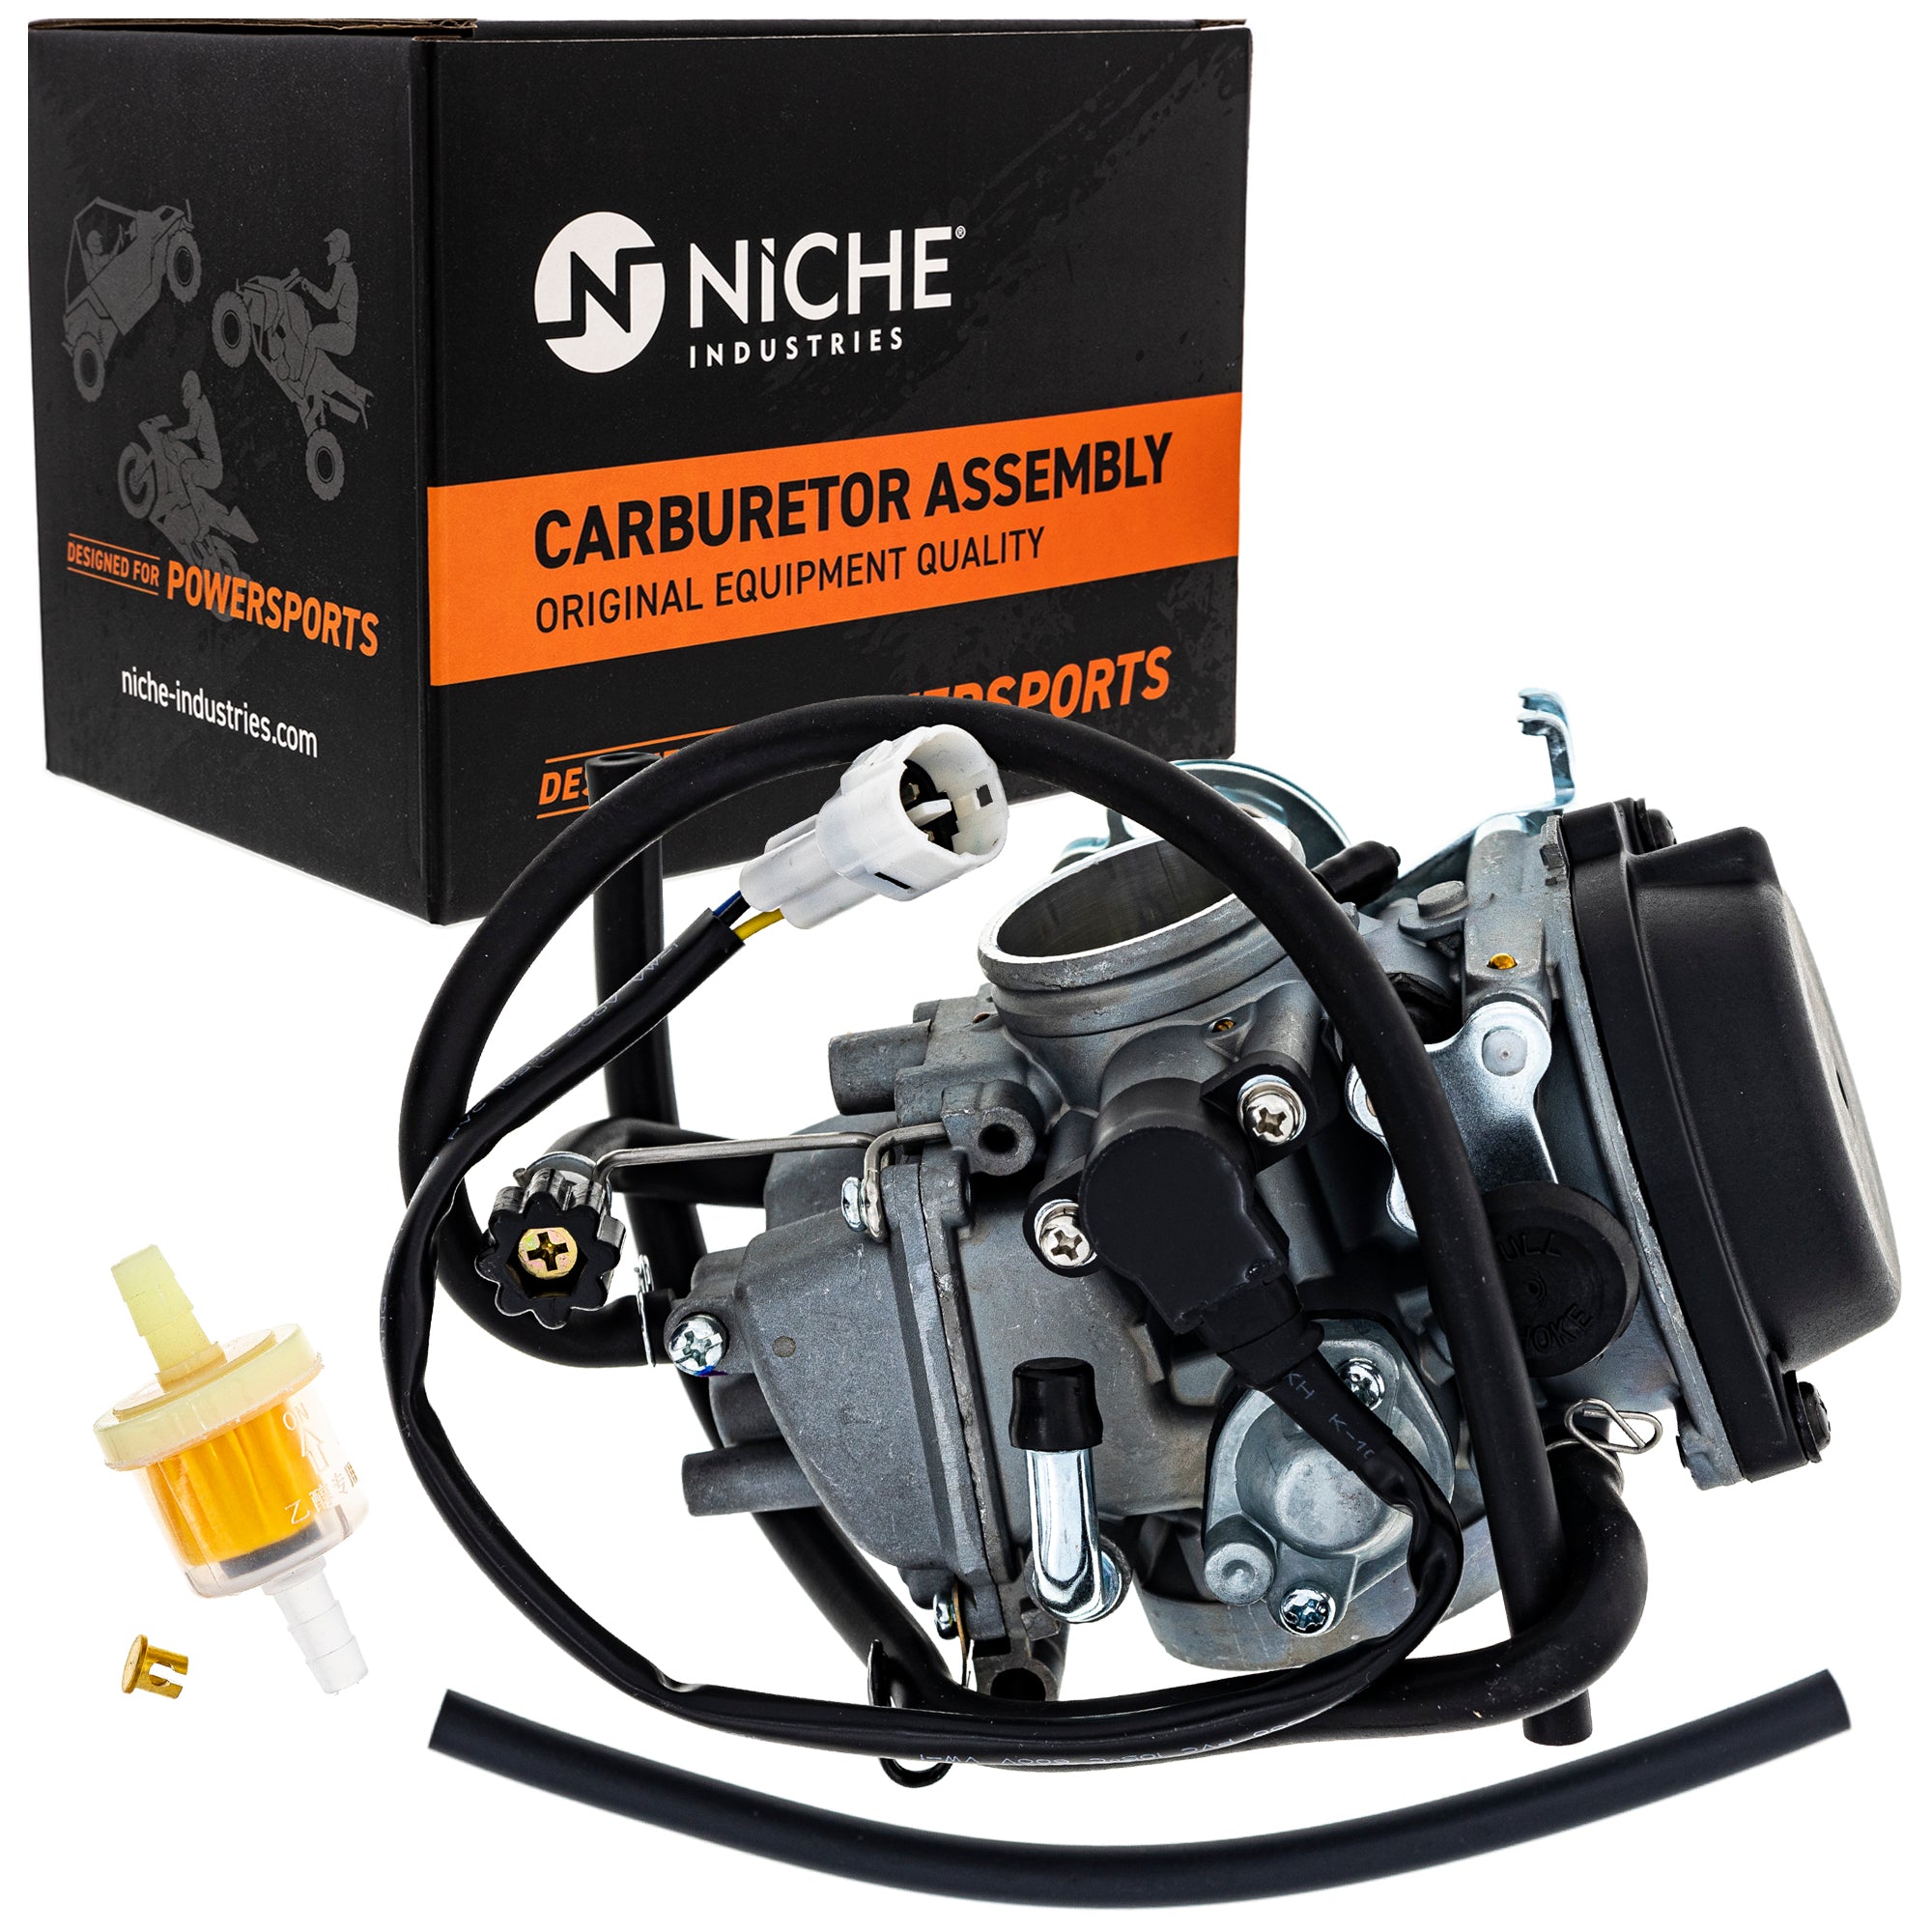 NICHE Carburetor Assembly 13200-13F30